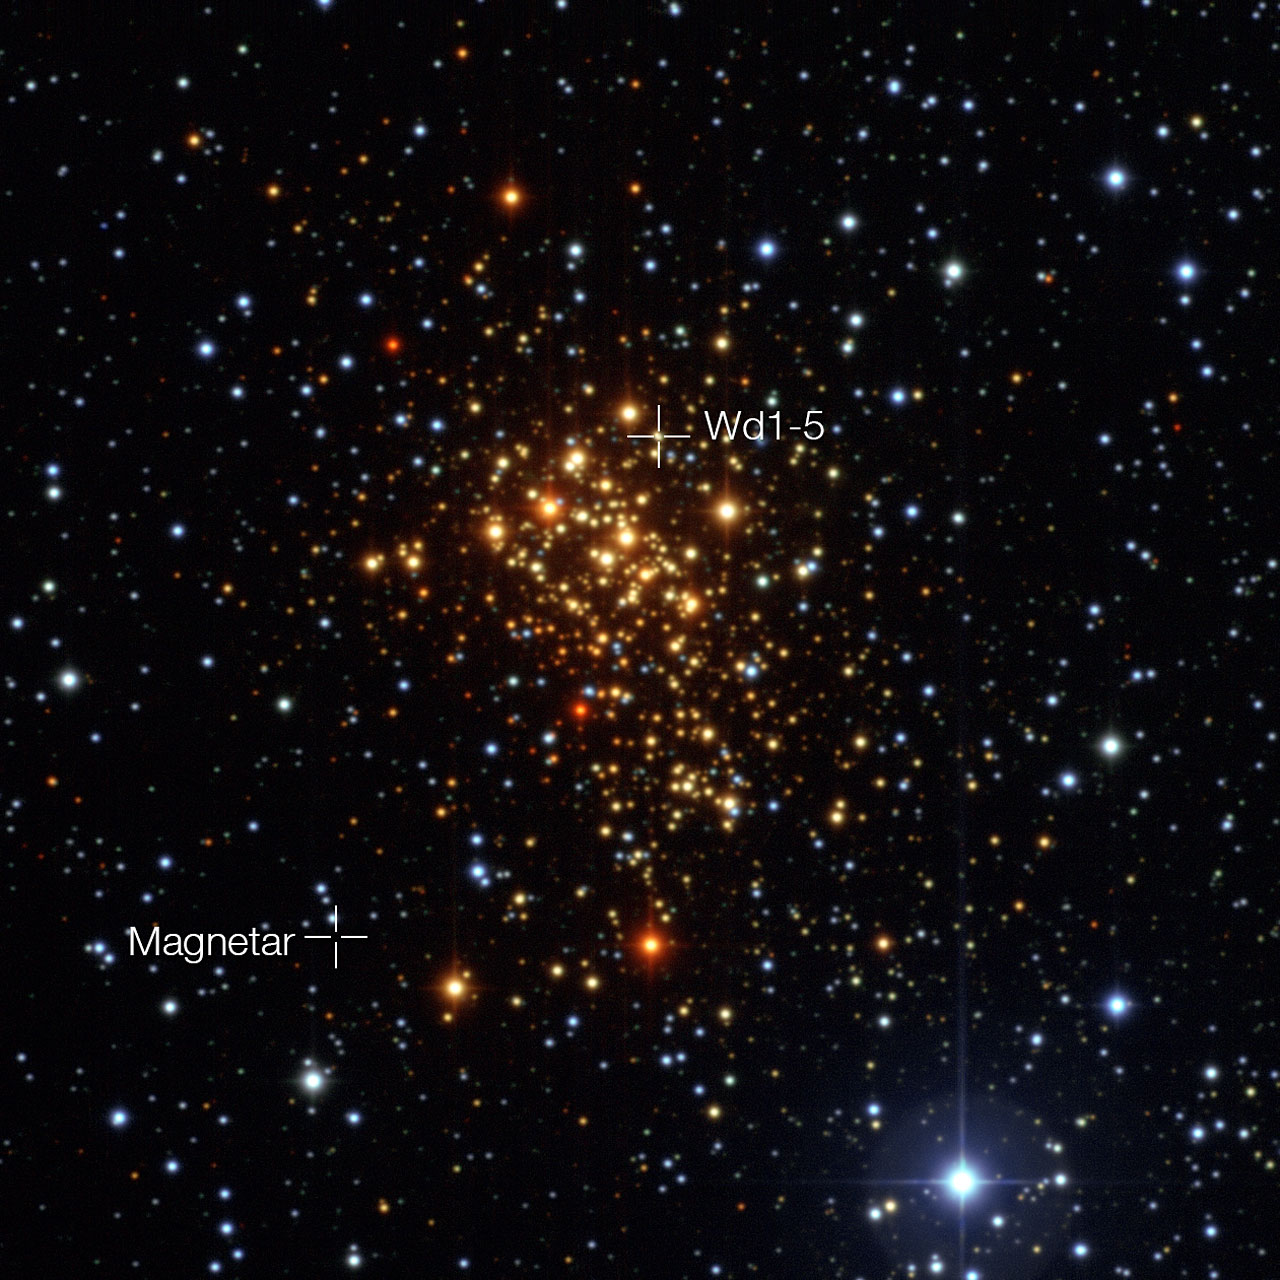 The star cluster Westerlund 1